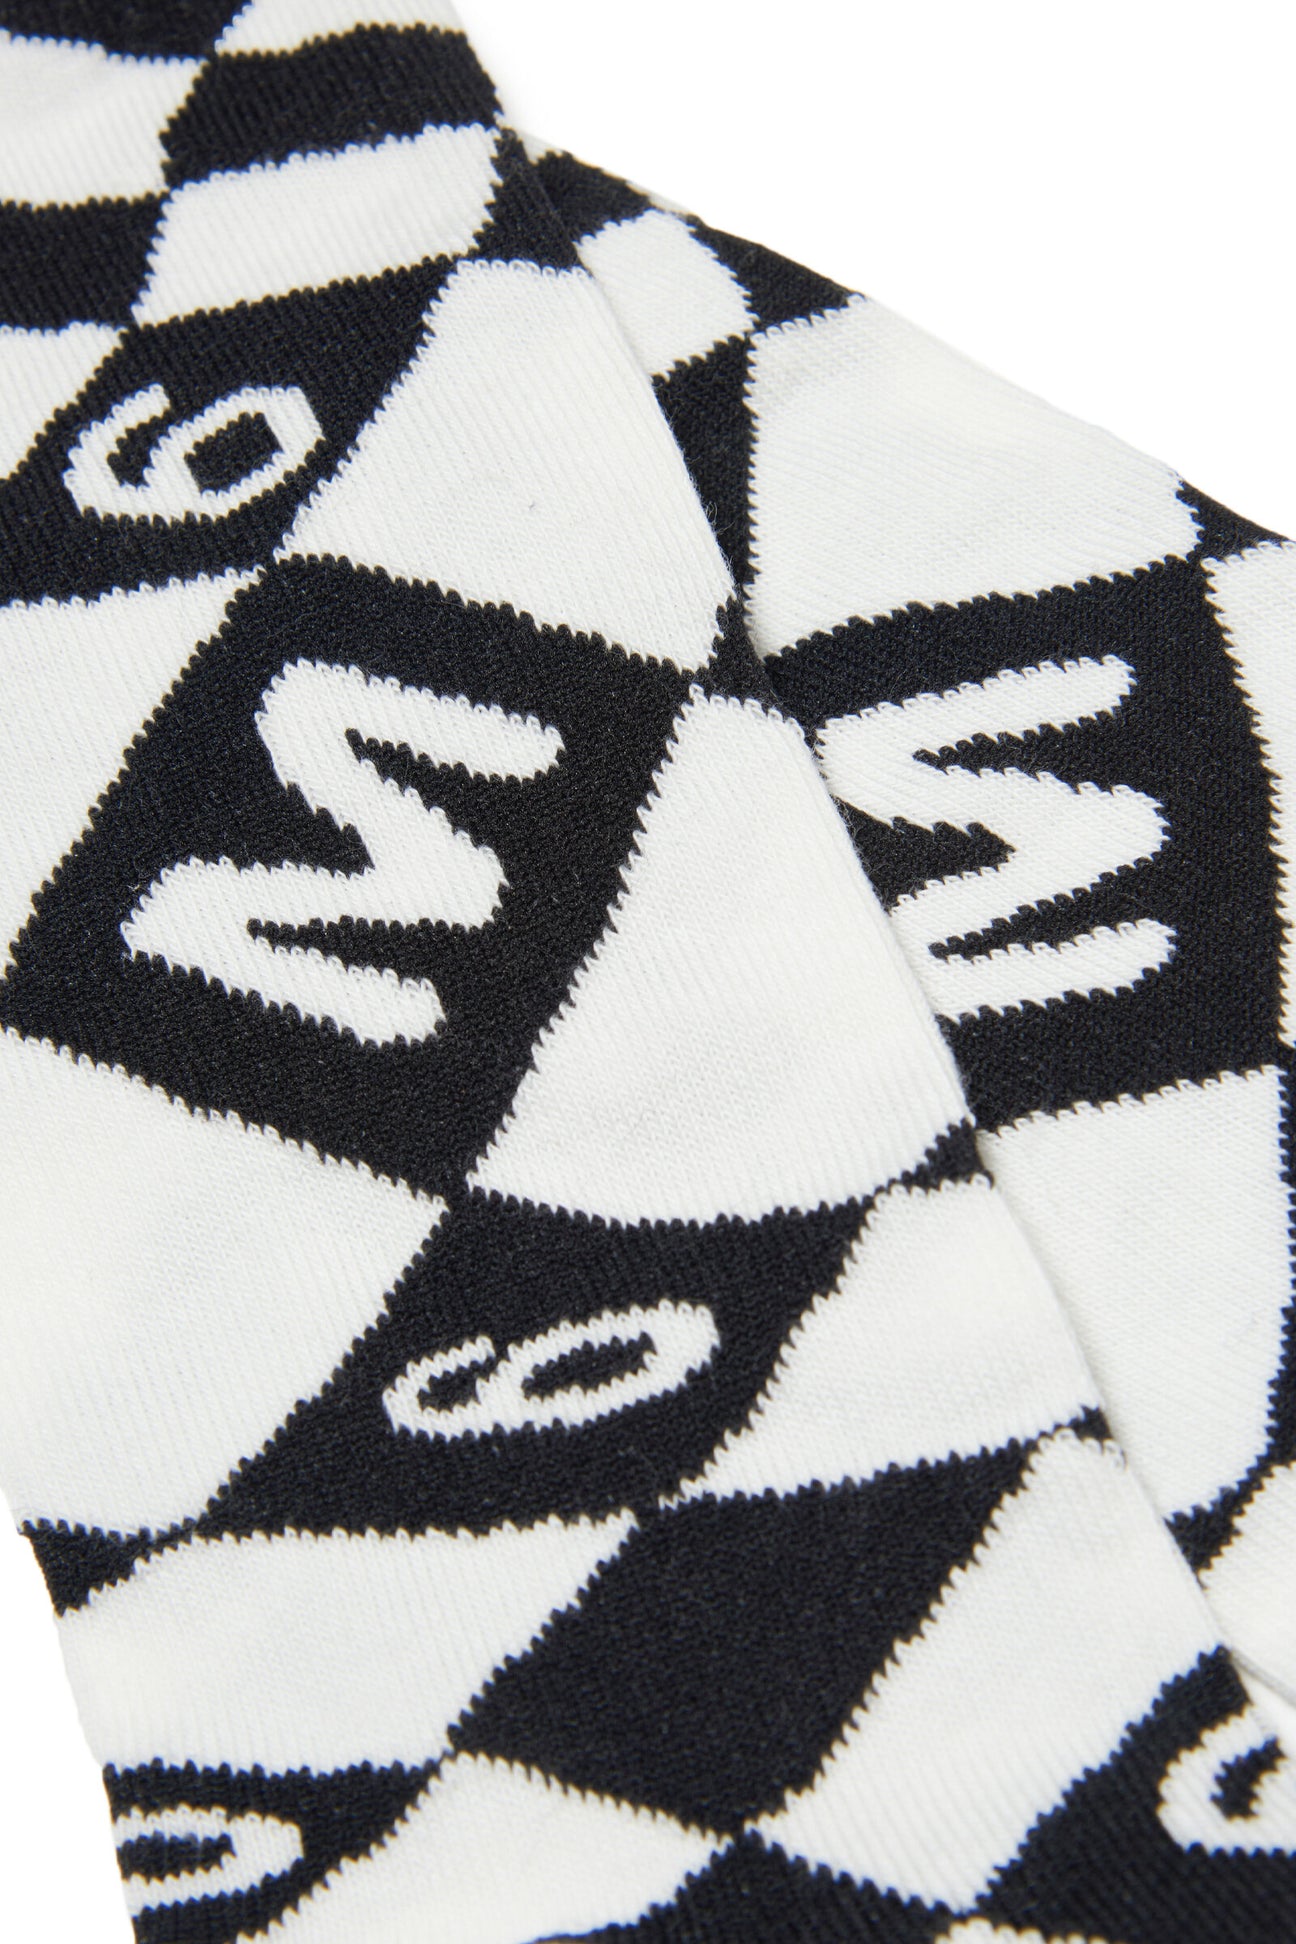 Black and white jacquard cotton-blend socks with chequered pattern Black and white jacquard cotton-blend socks with chequered pattern